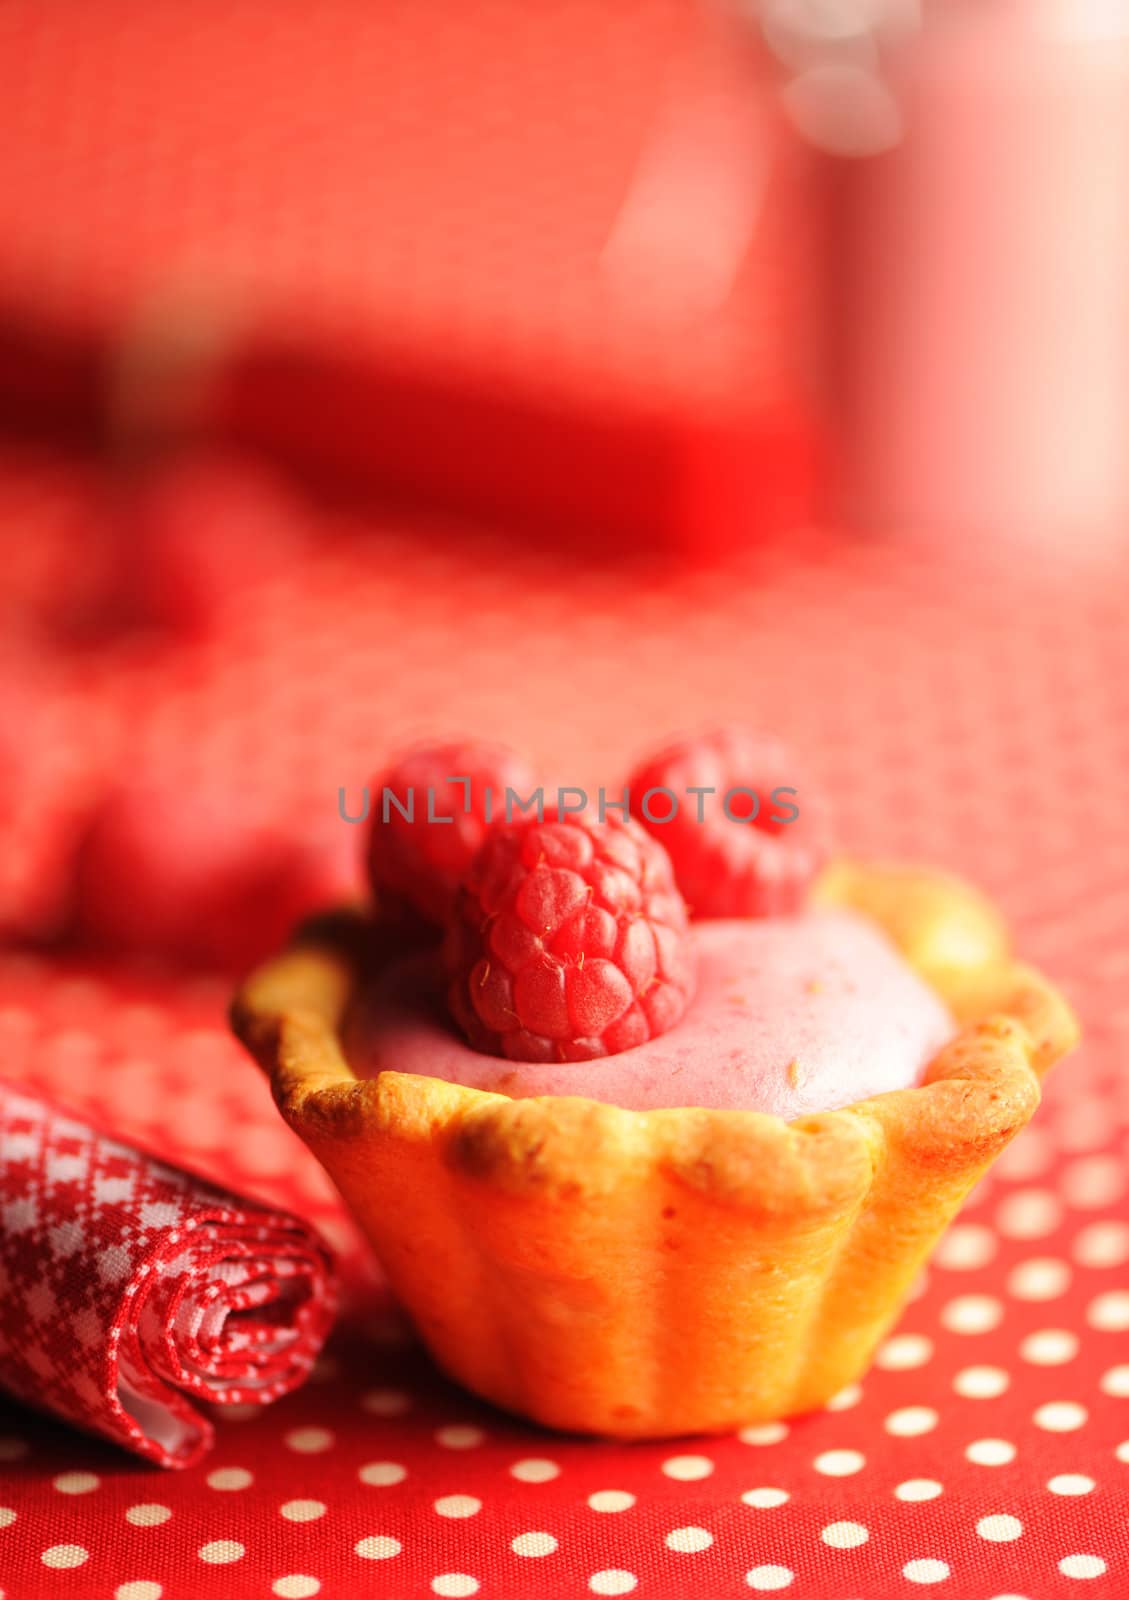 Cake with raspberry yogurt dessert with shallow DOF